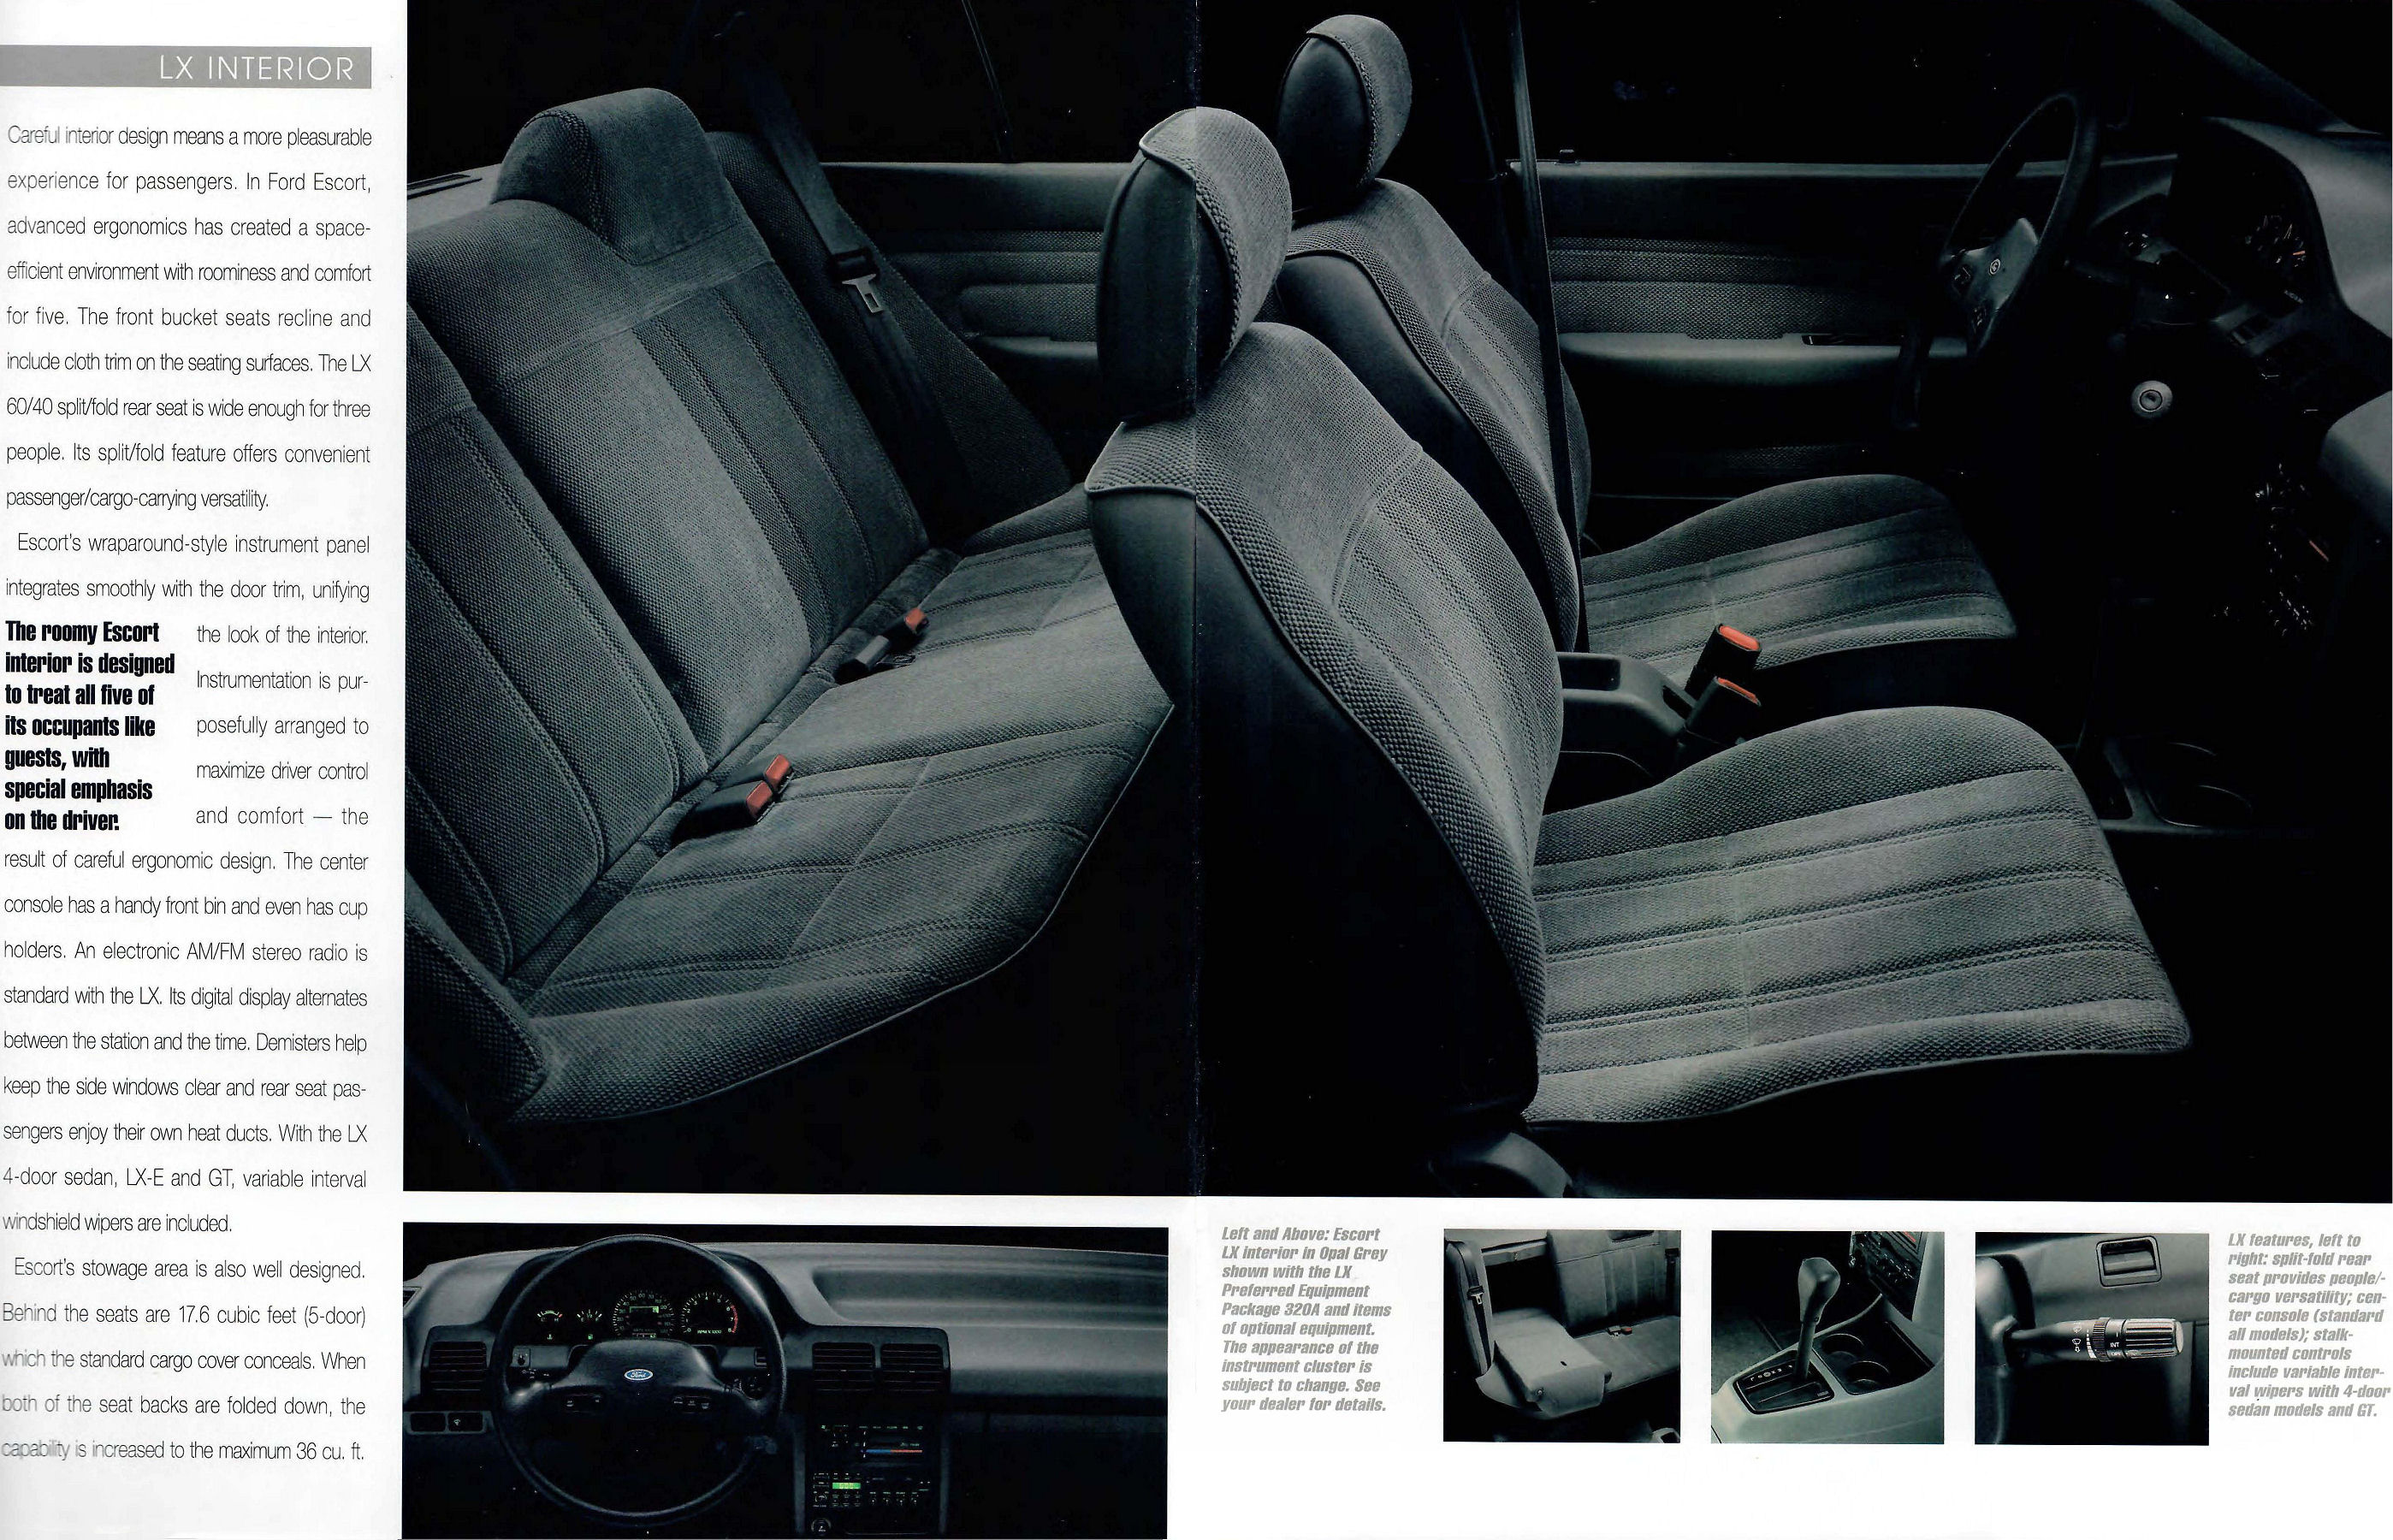 1993 Ford Escort-06-07